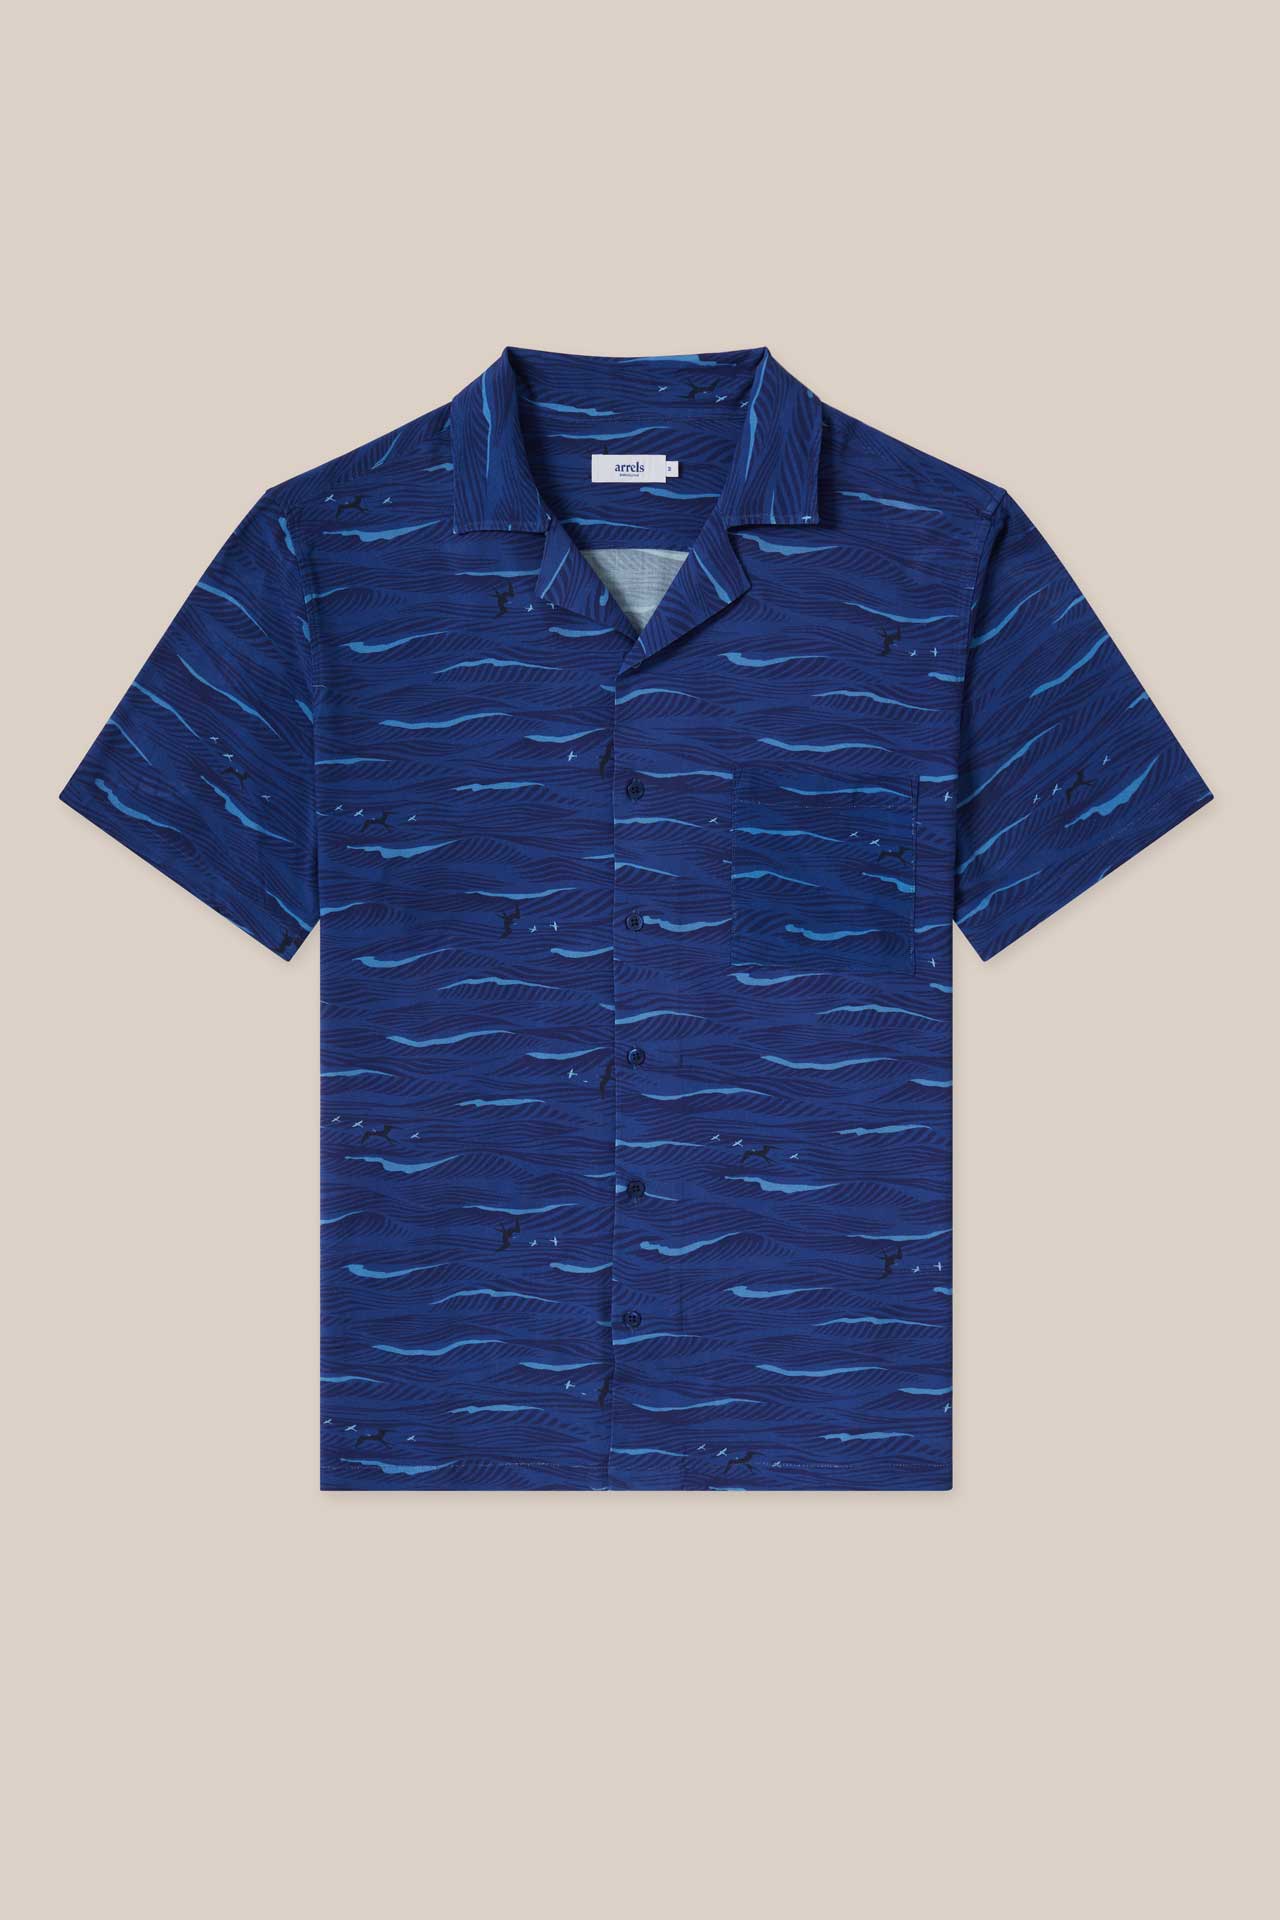 Shirt Blue Flying Fish -  shirt-blue-flying-fish-x-kikuo-johnson -Arrels Barcelona